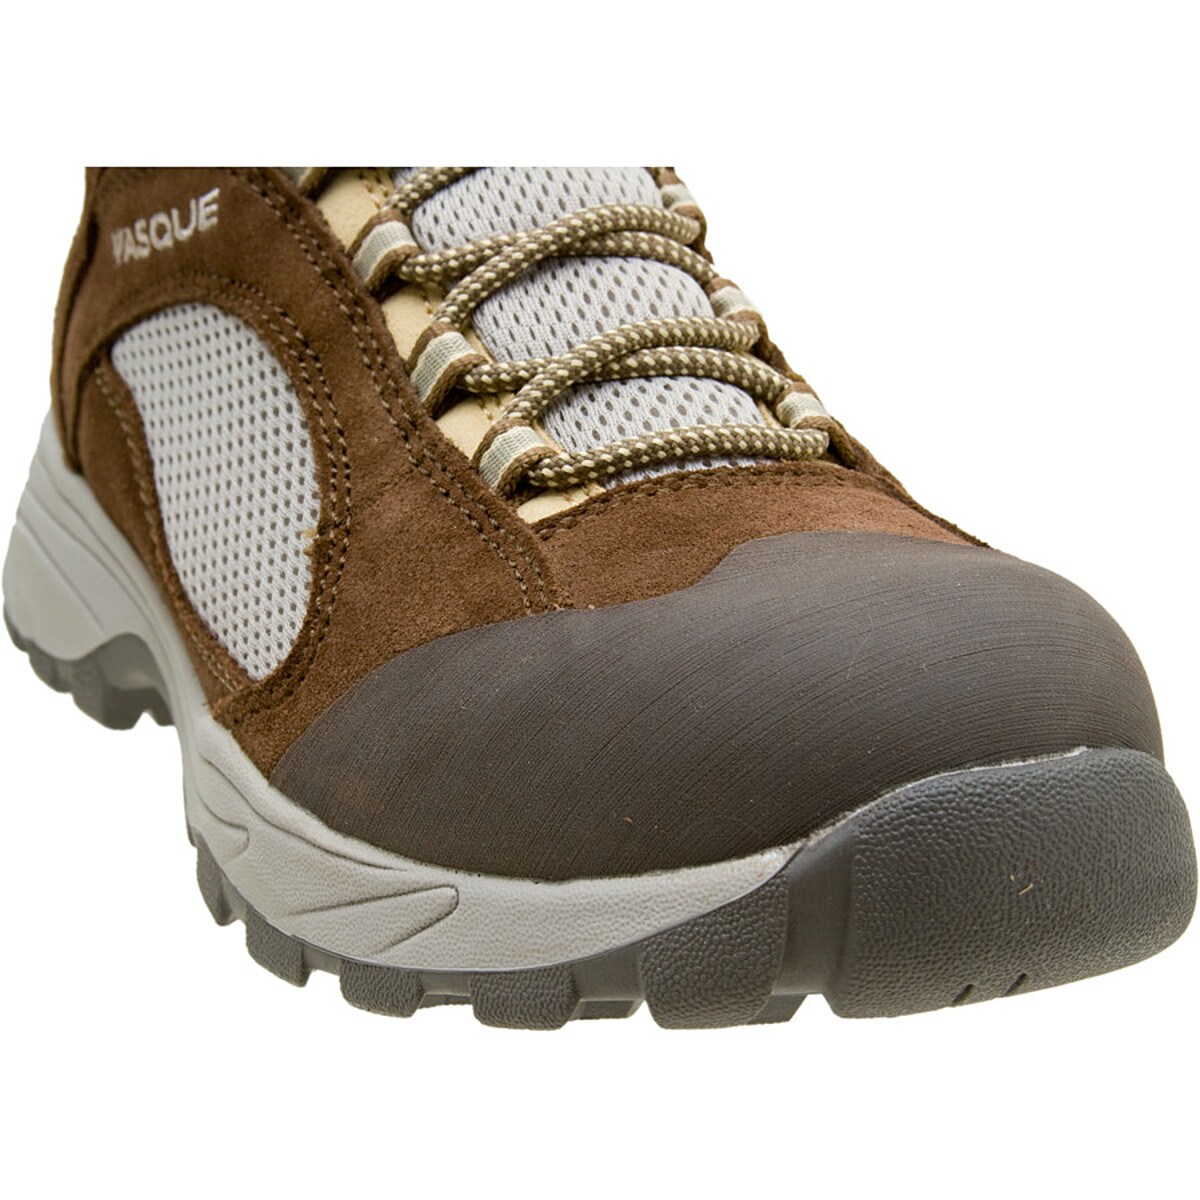 Bhava Ranger Hiker Leather Suede Flat Rubber Sole Trek Boots Size EUR 39 US  8